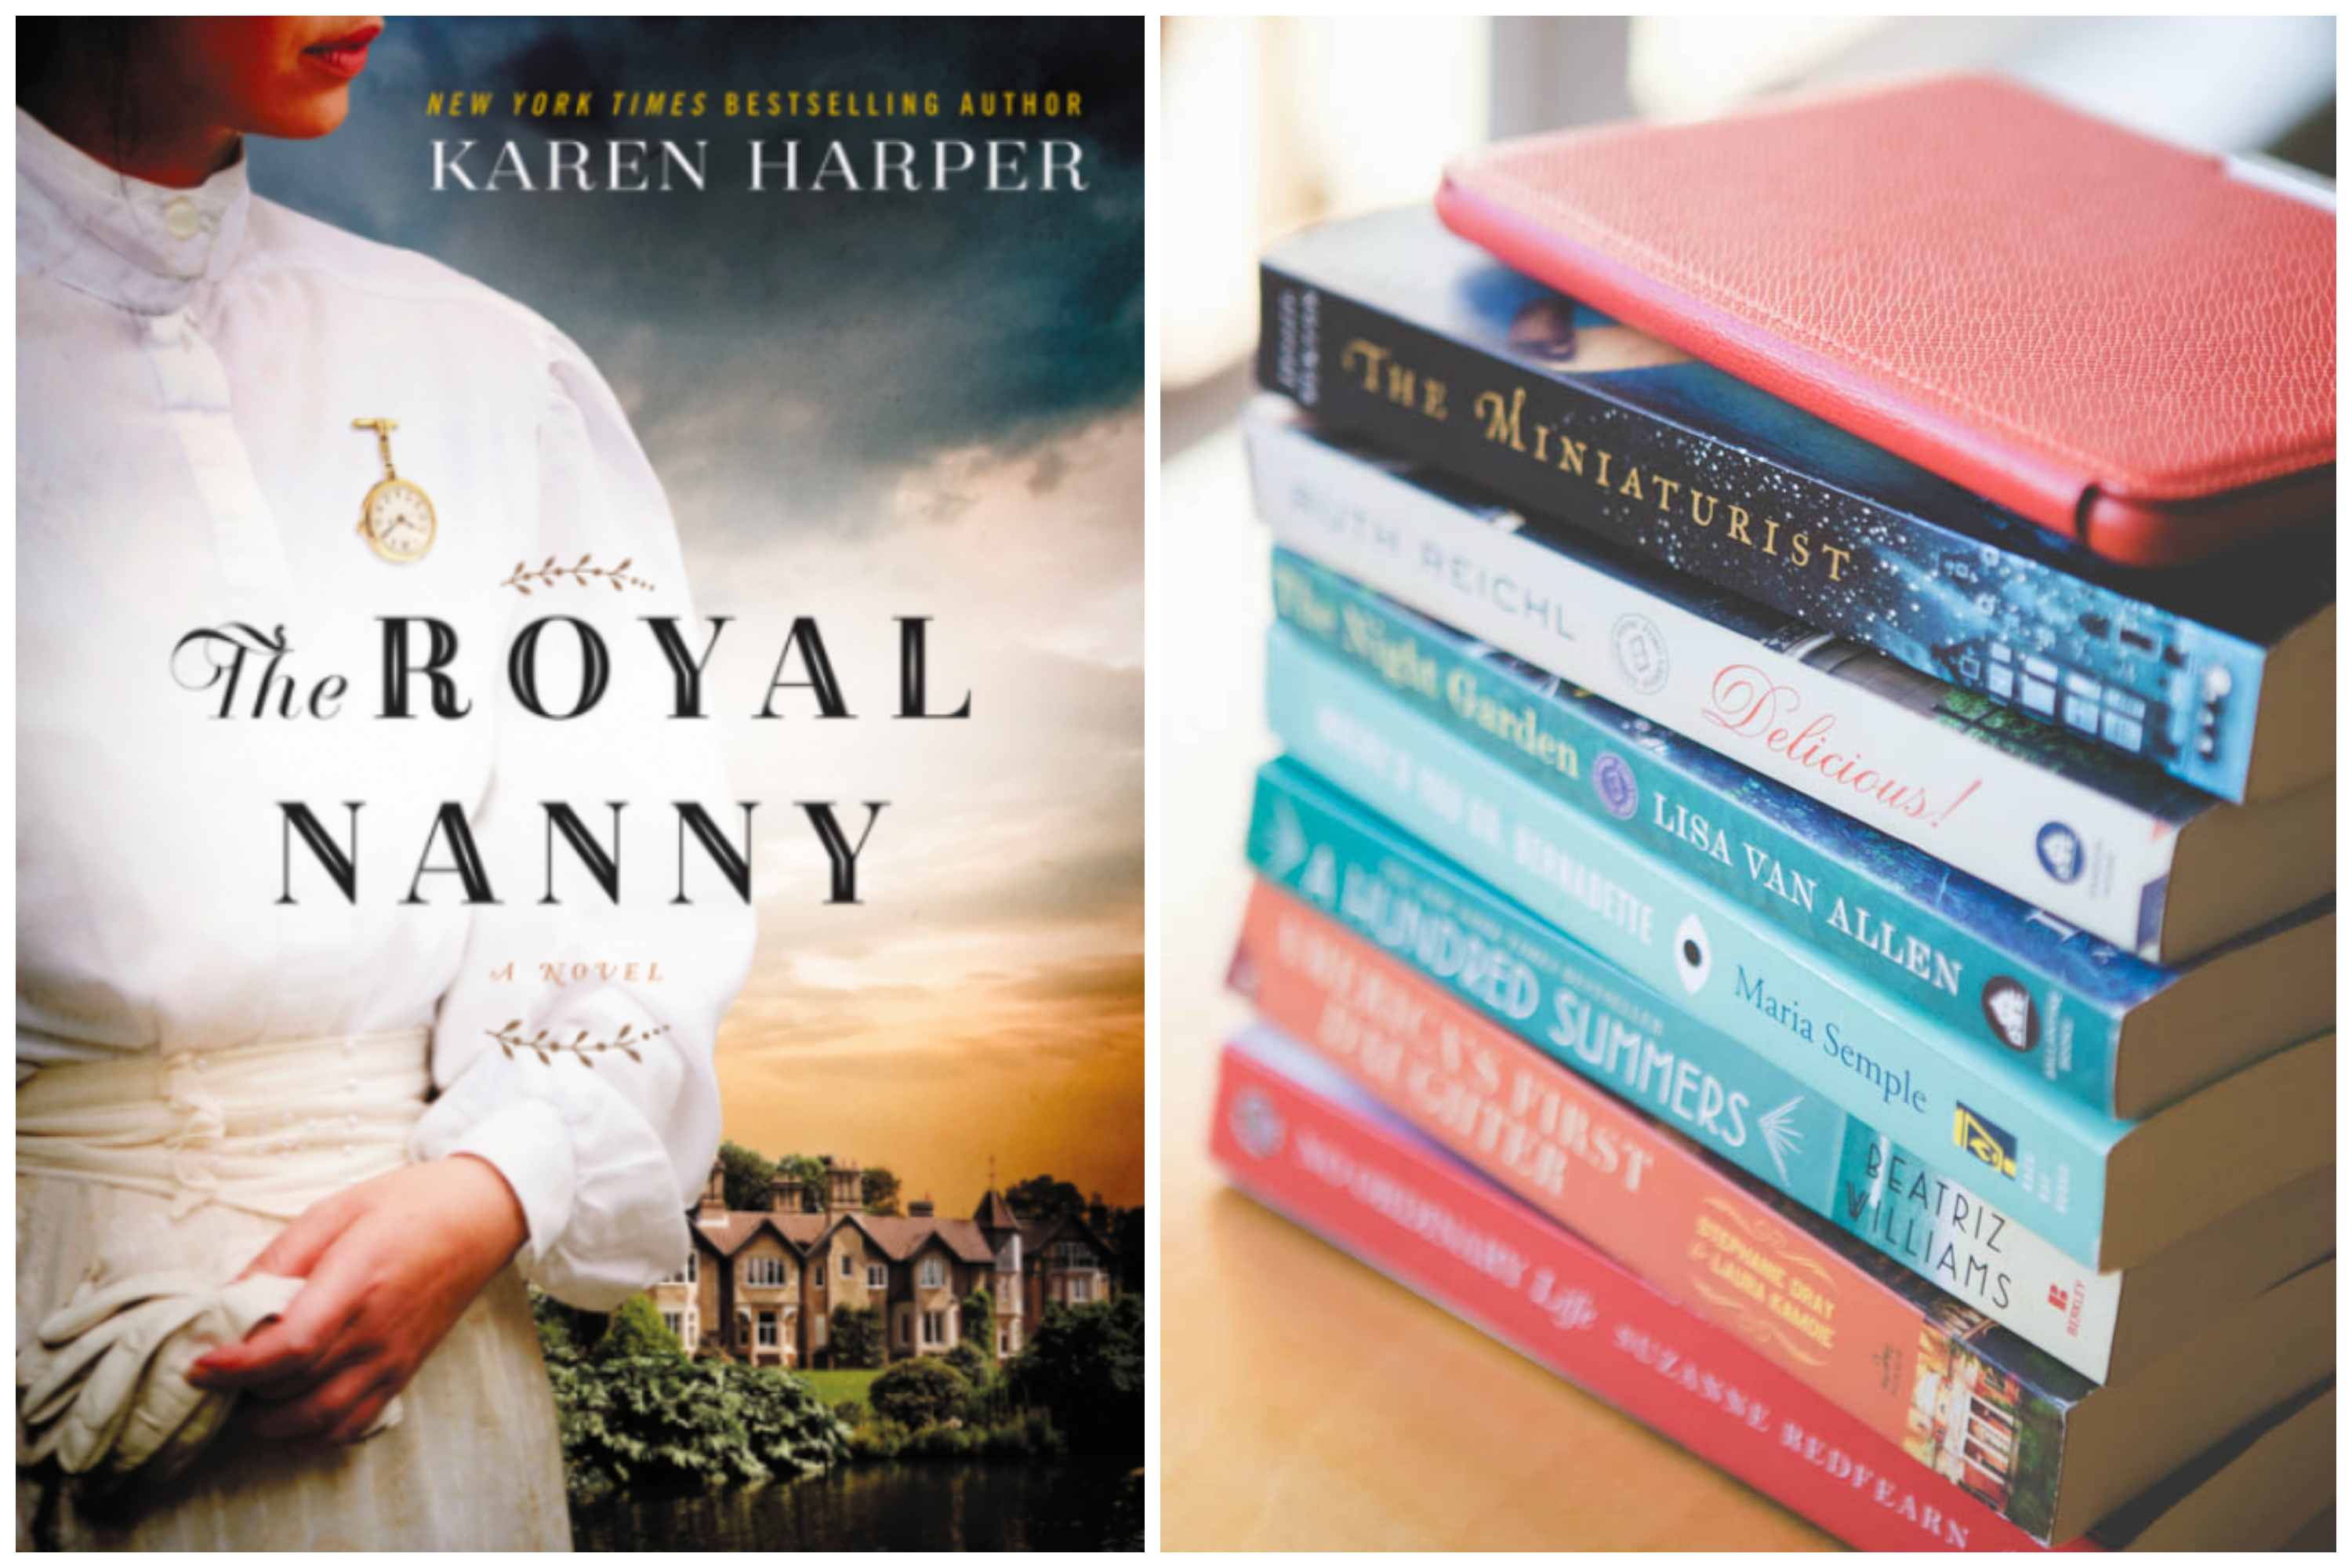 The Royal Nanny by Karen Harper